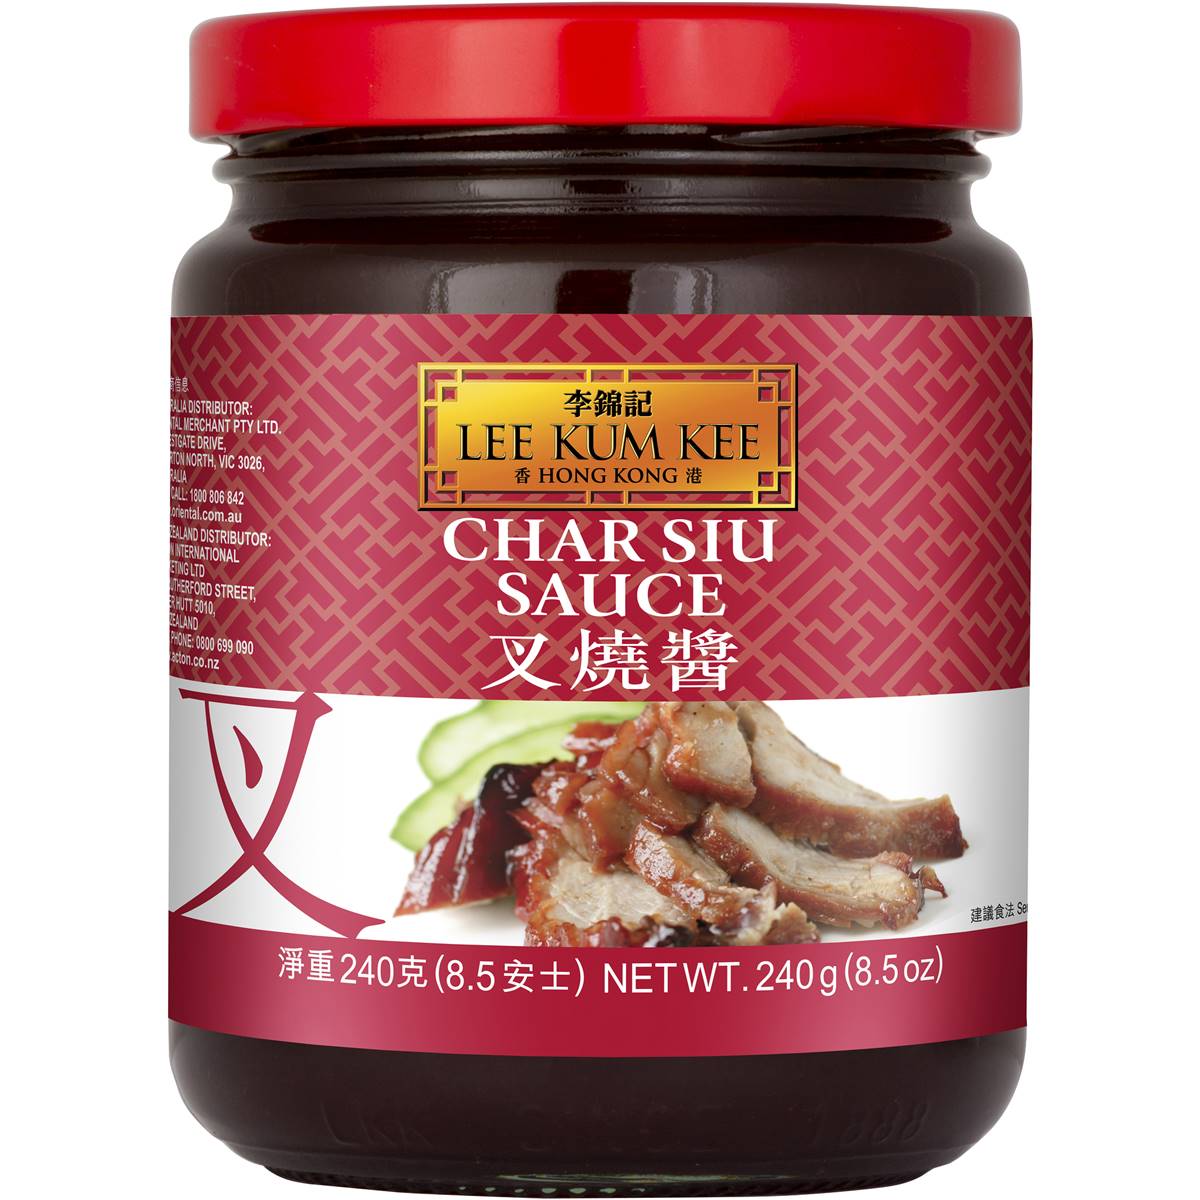 Calories in Lee Kum Kee Sauce Char Siu